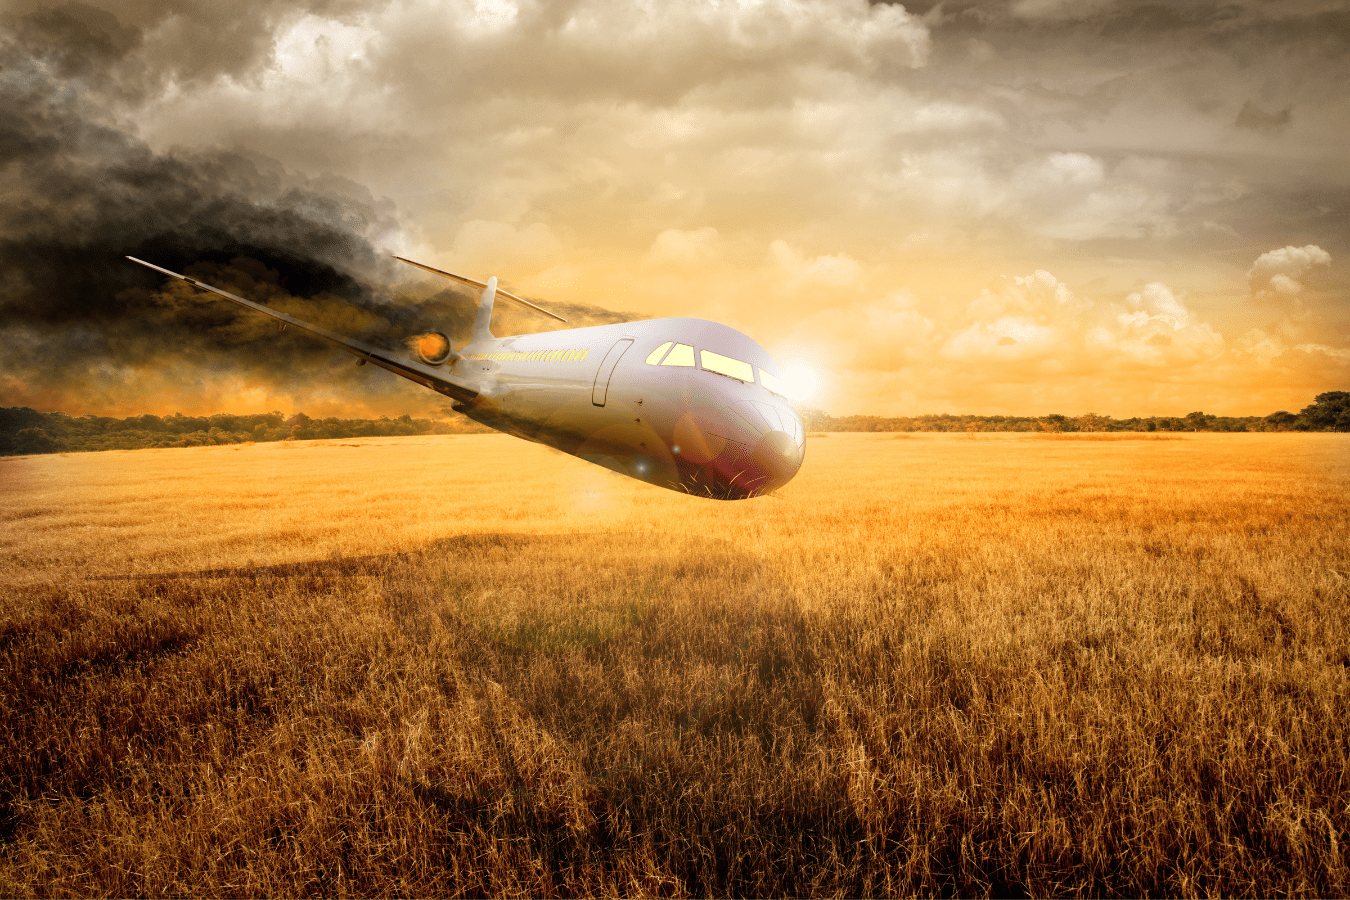 Dream About Plane Crash: What Does it Mean?